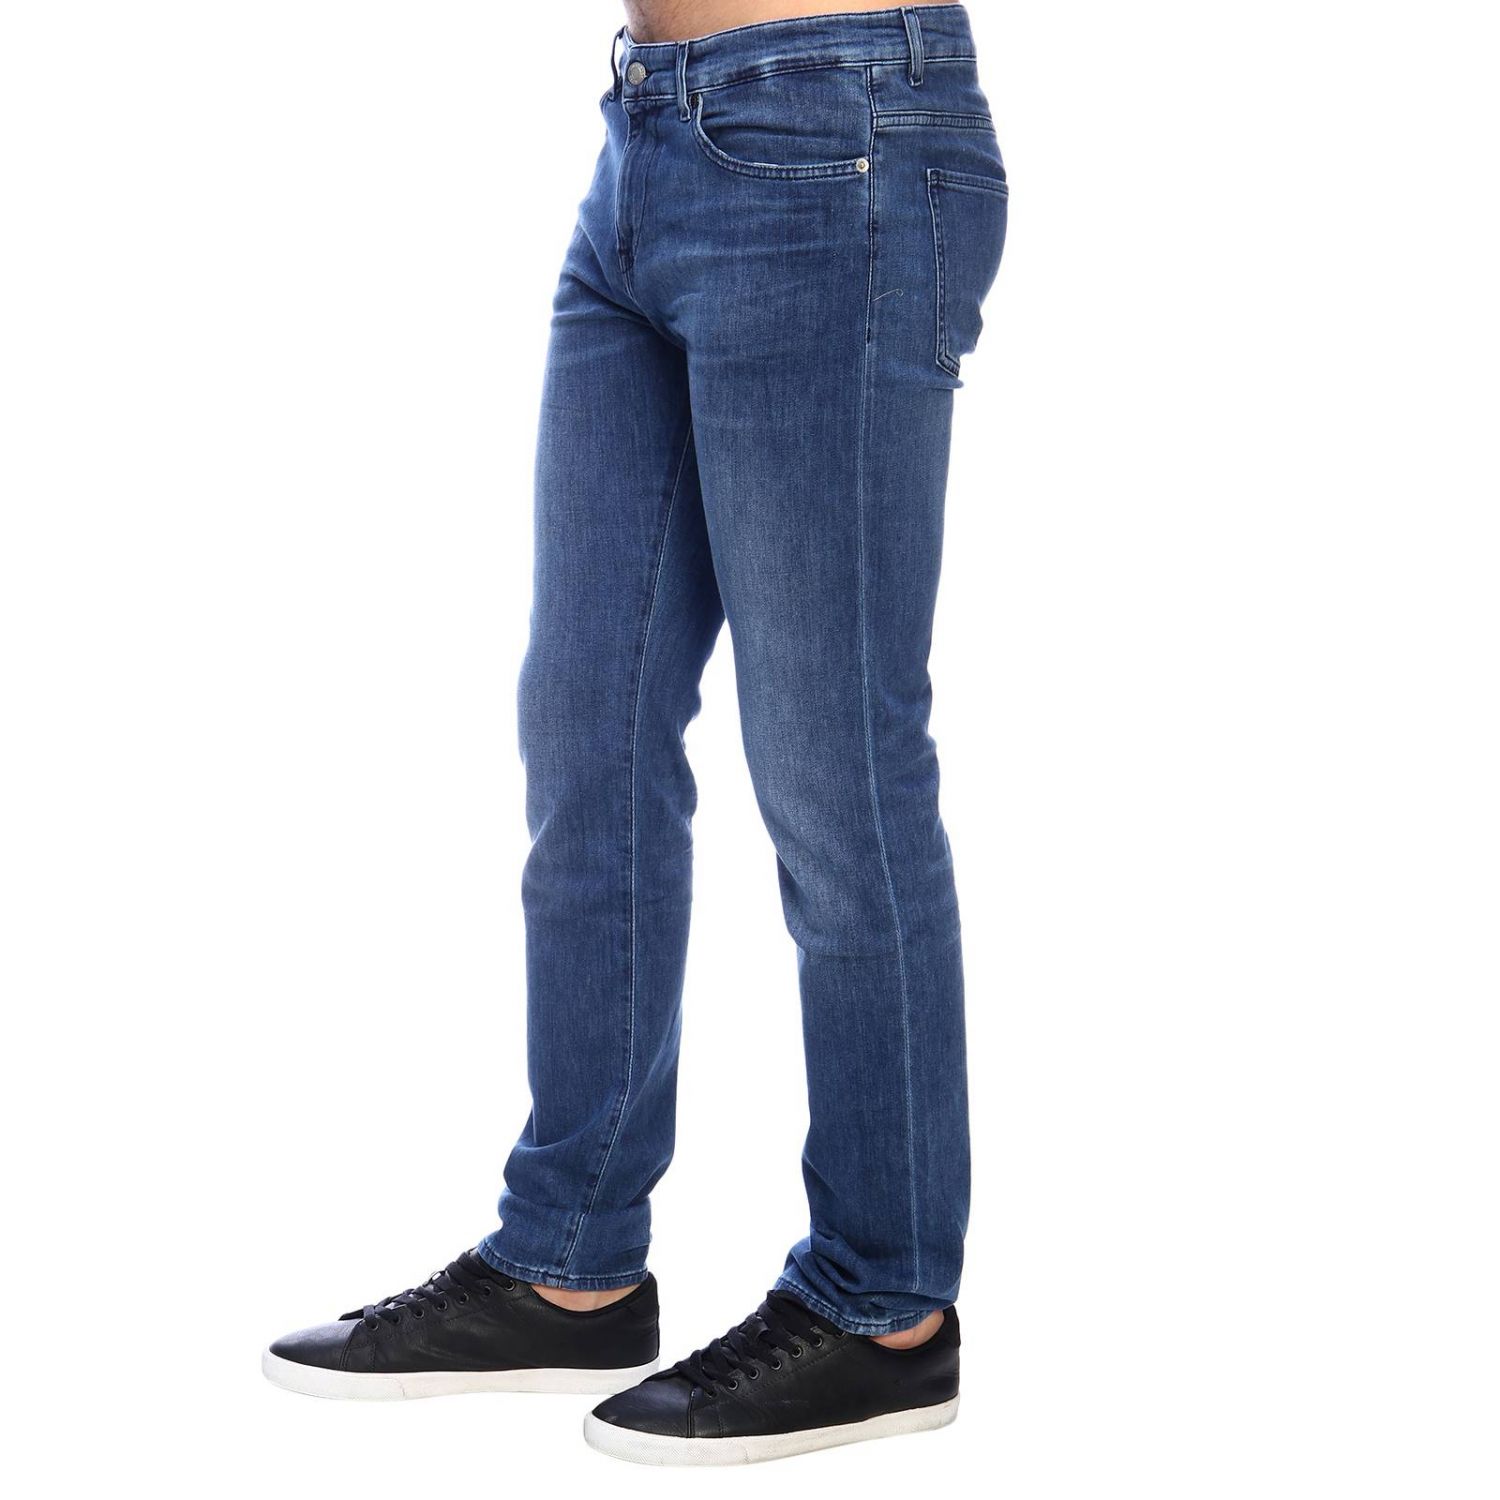 Hugo Boss Outlet: Jeans uomo | Jeans Hugo Boss Uomo Denim | Jeans Hugo Boss  3110215906 DELAWARE Giglio IT